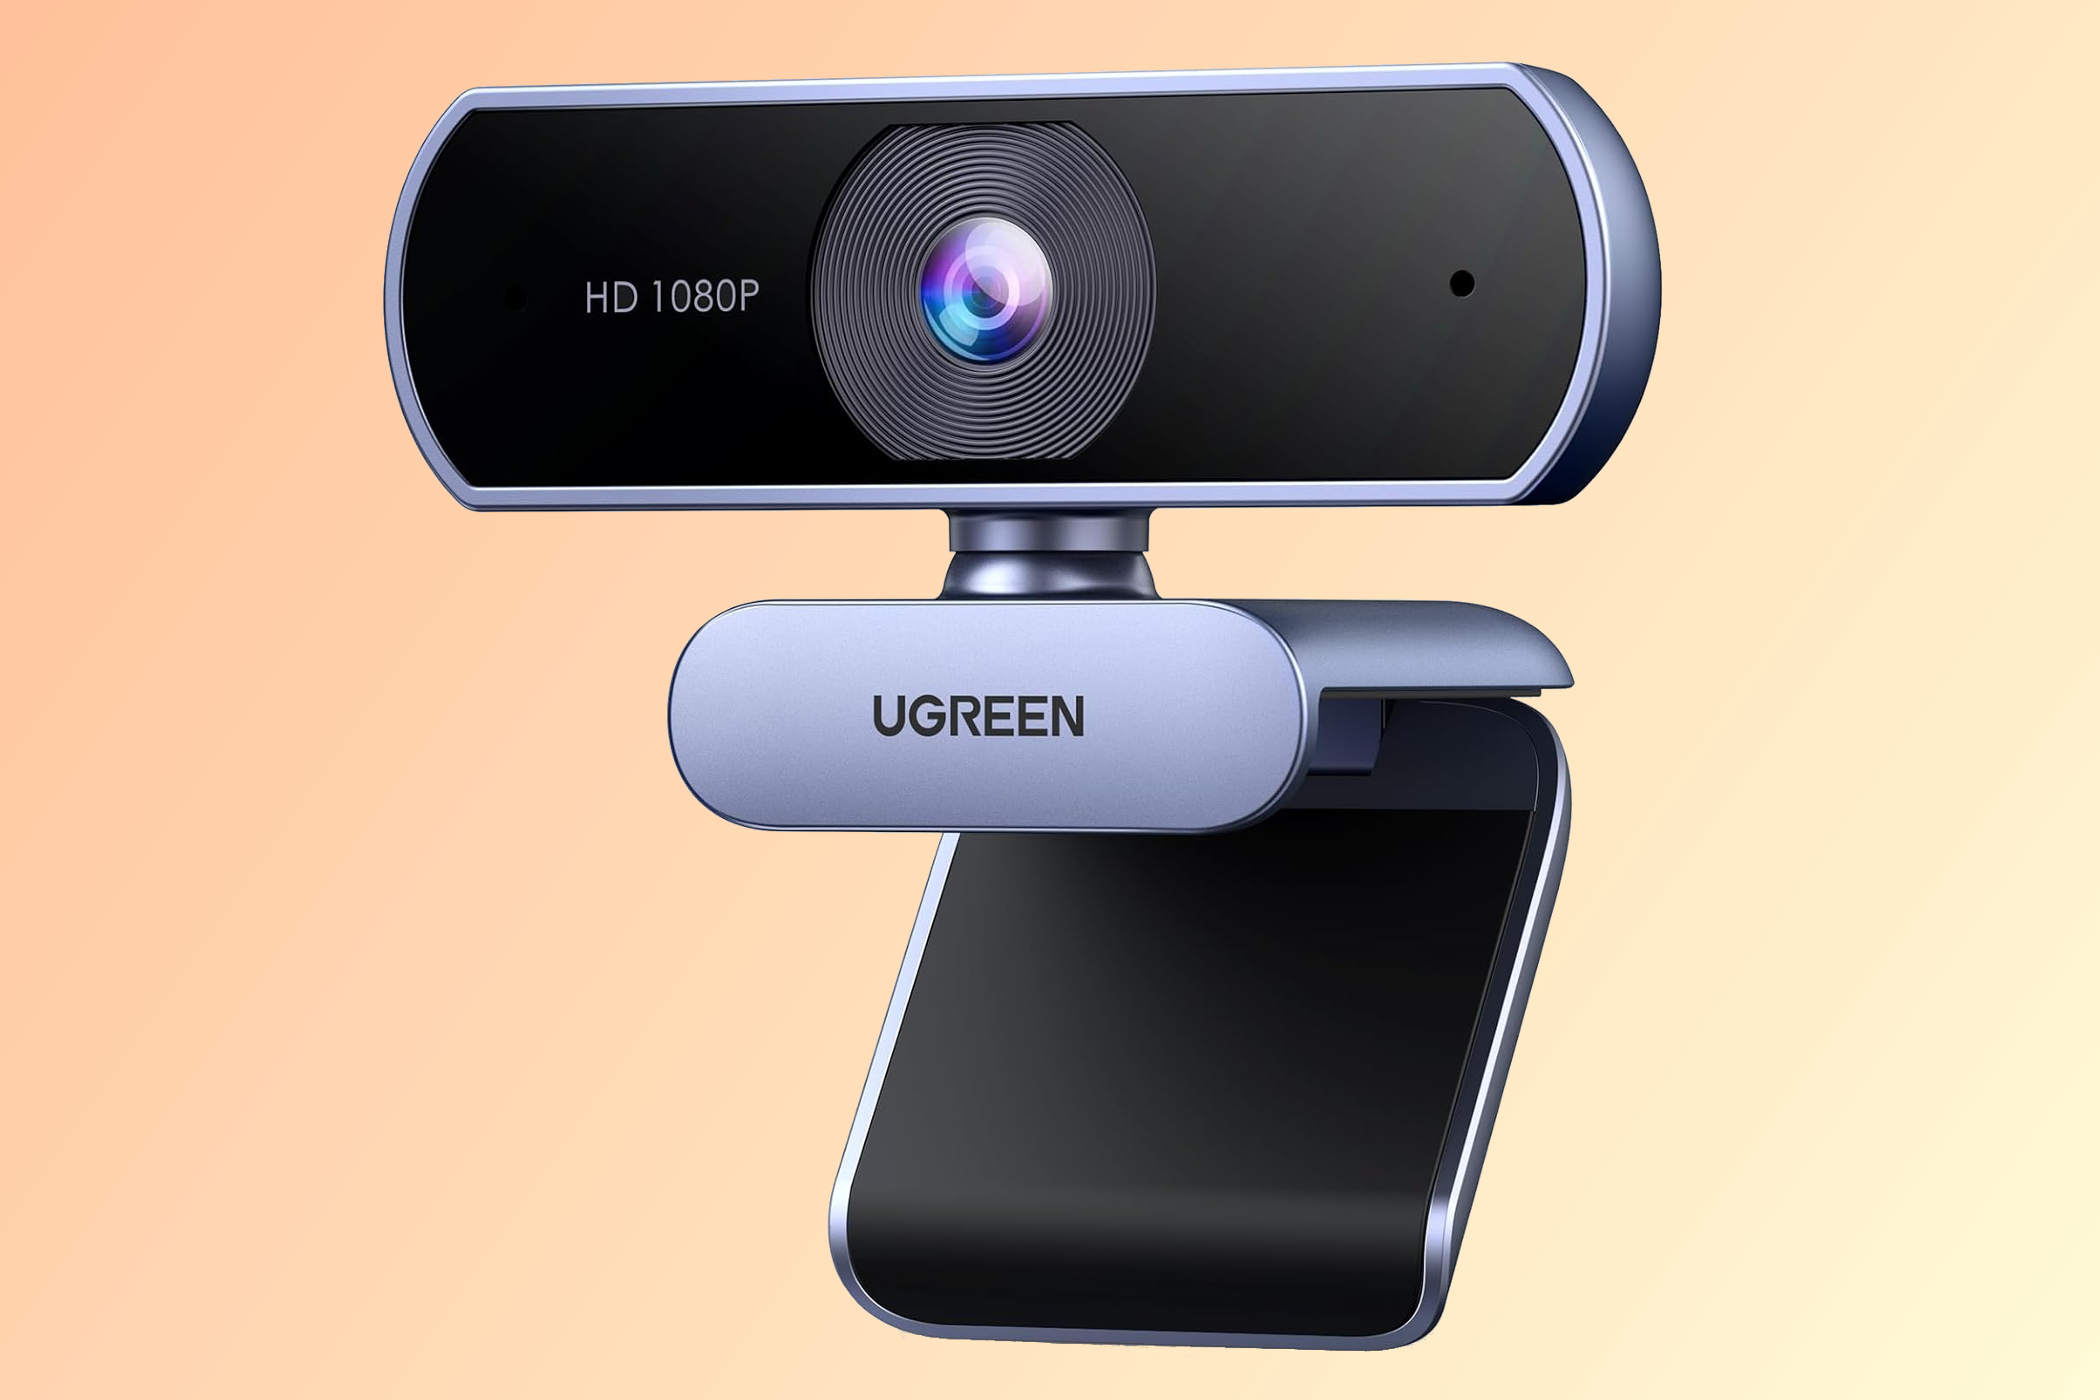 UGREEN 1080p webcam